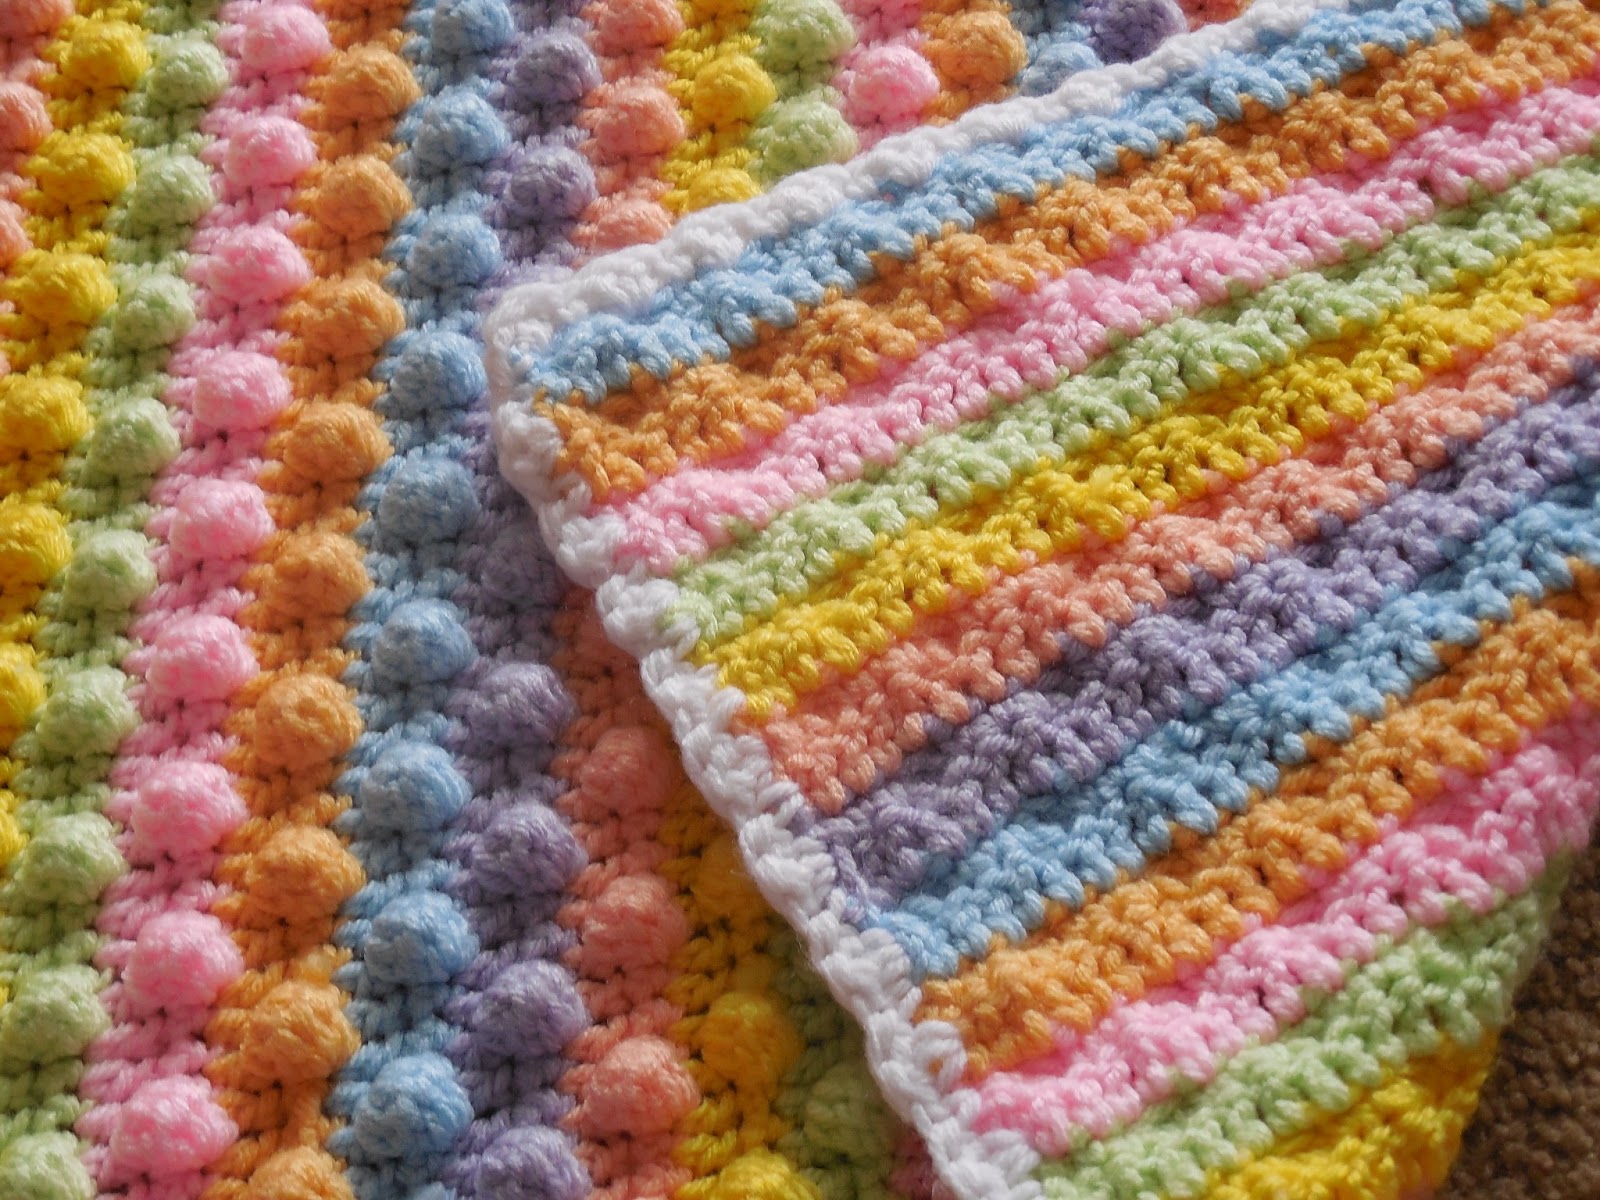 Hooked On Handmade: Popcorn stitch blanket